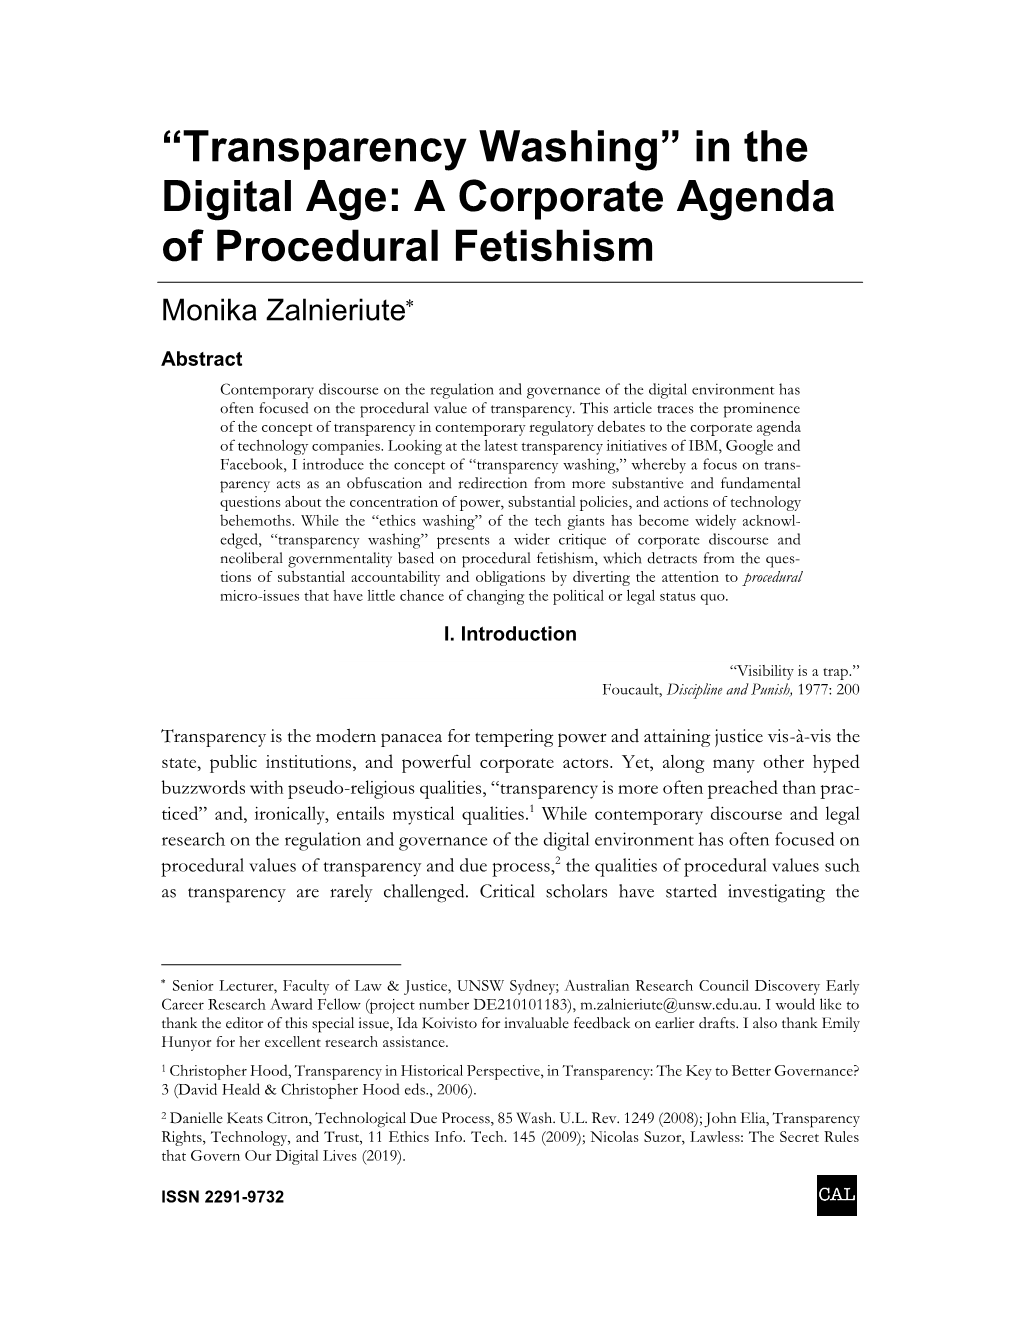 In the Digital Age: a Corporate Agenda of Procedural Fetishism Monika Zalnieriute